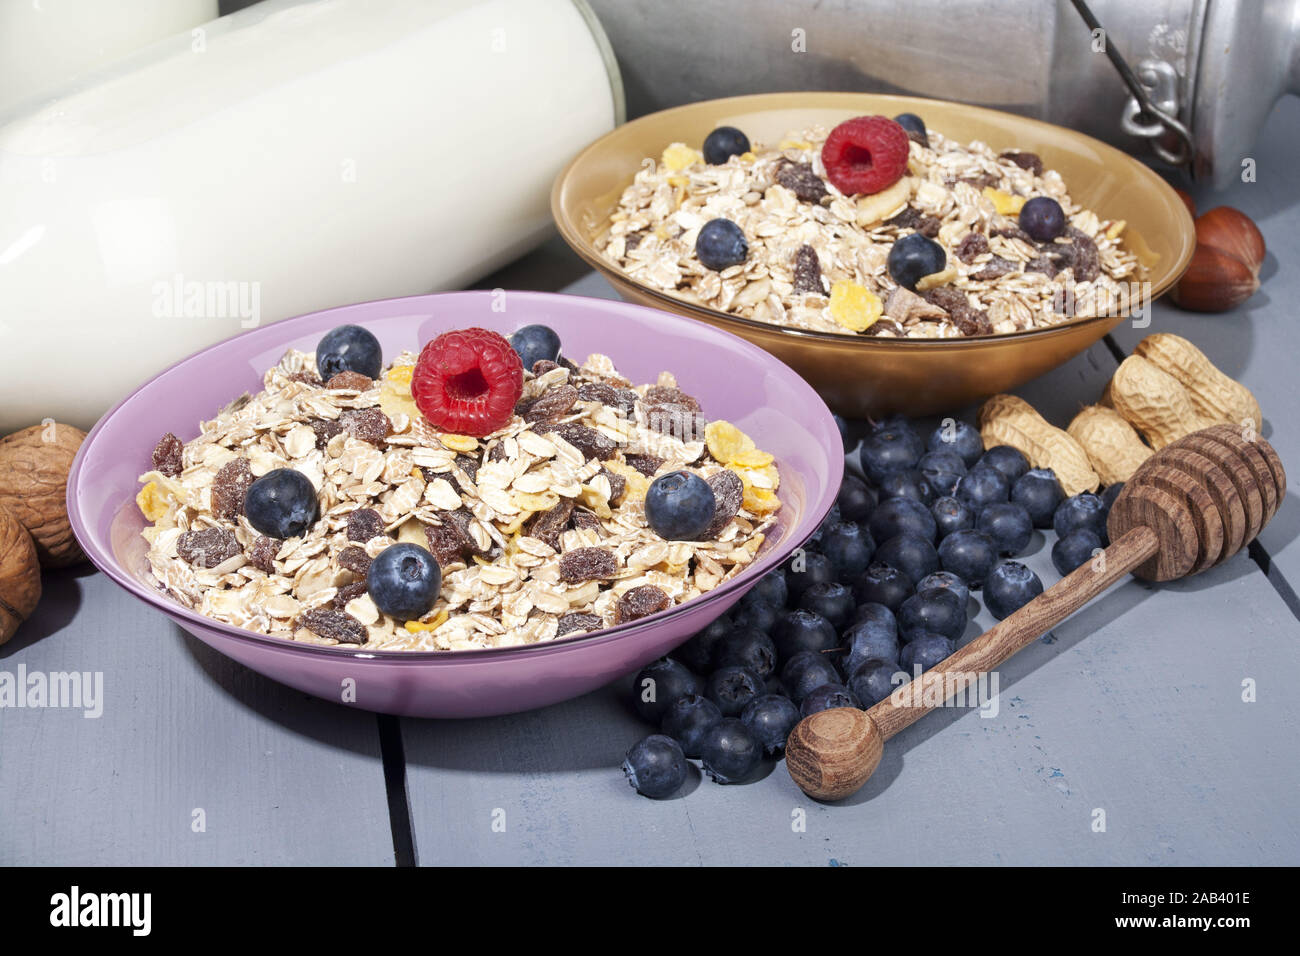 Kompottschalen mit Cerealien und Fruechten |Compote dishes with cereals and fruits| Stock Photo